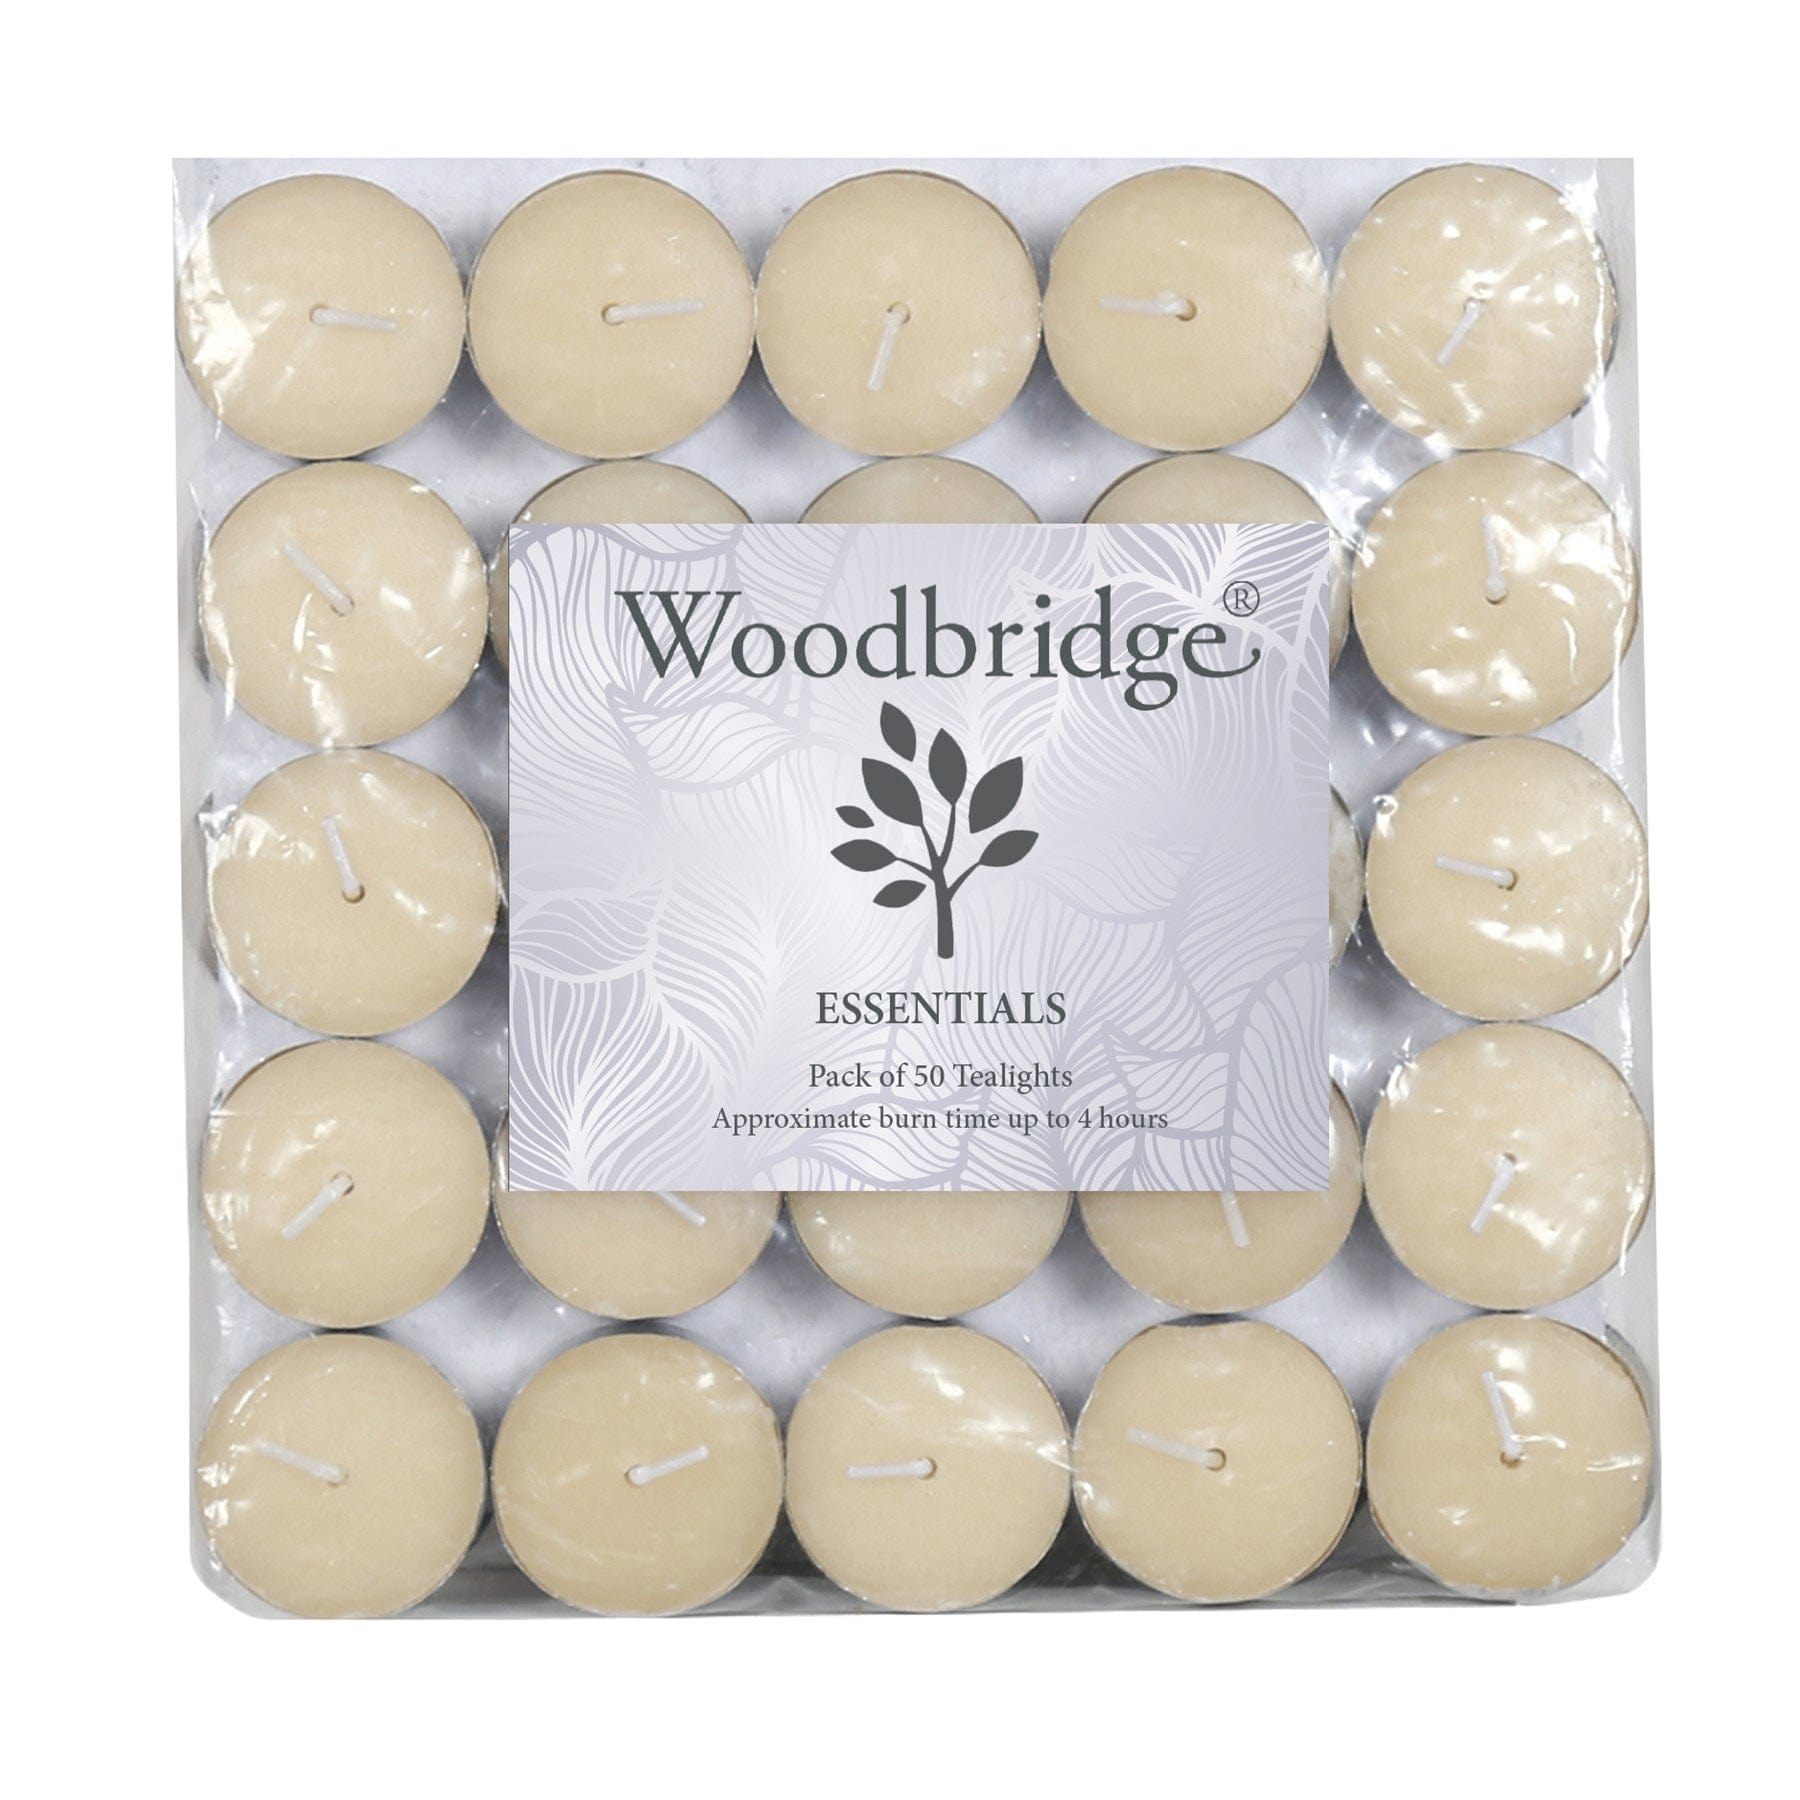 Yankee Candle Tea Lights Woodbridge Essentials Ivory Unscented Tealights - Pack of 50